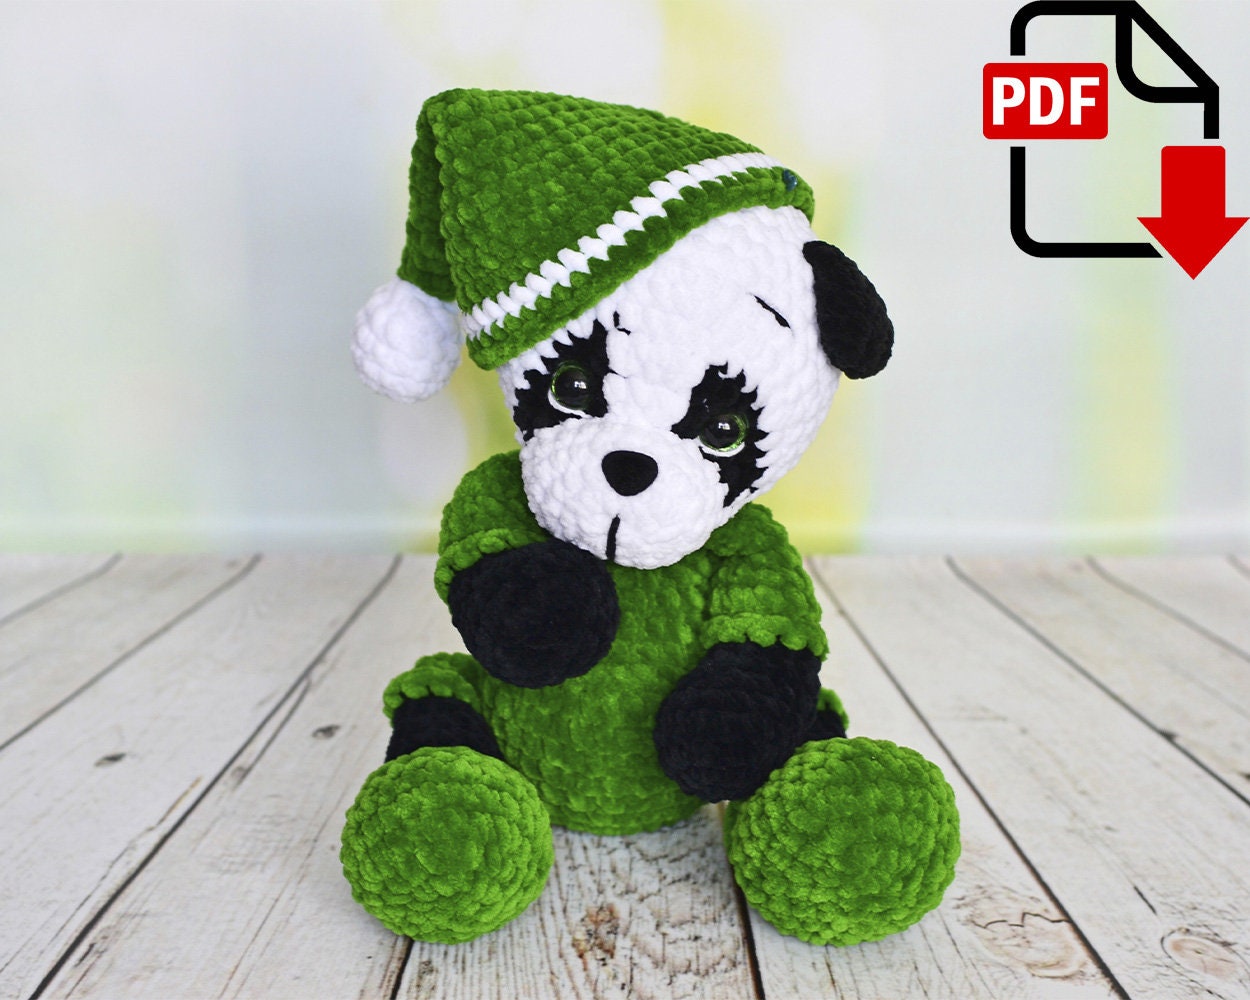 Papercraft Panda Desk Buddy With Bamboo Deckchair and Fact / Reminder Cards  